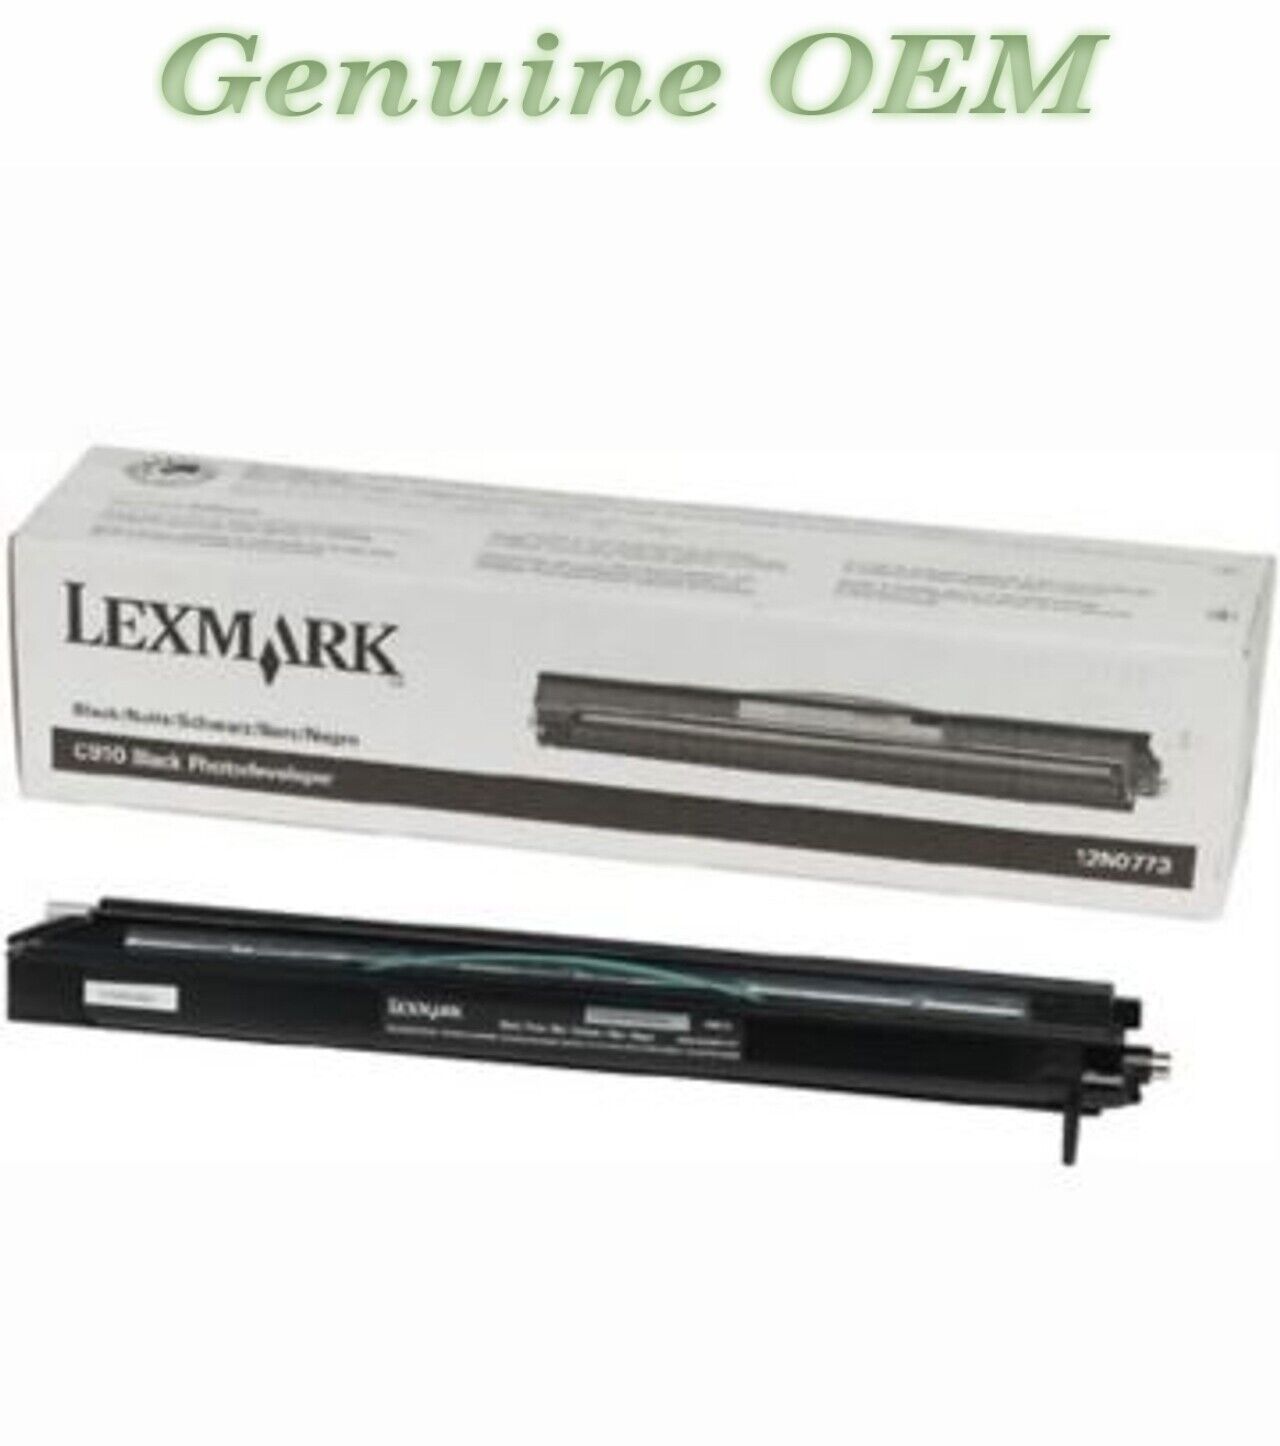 12N0773 Original OEM Lexmark Developer, Black Genuine Sealed